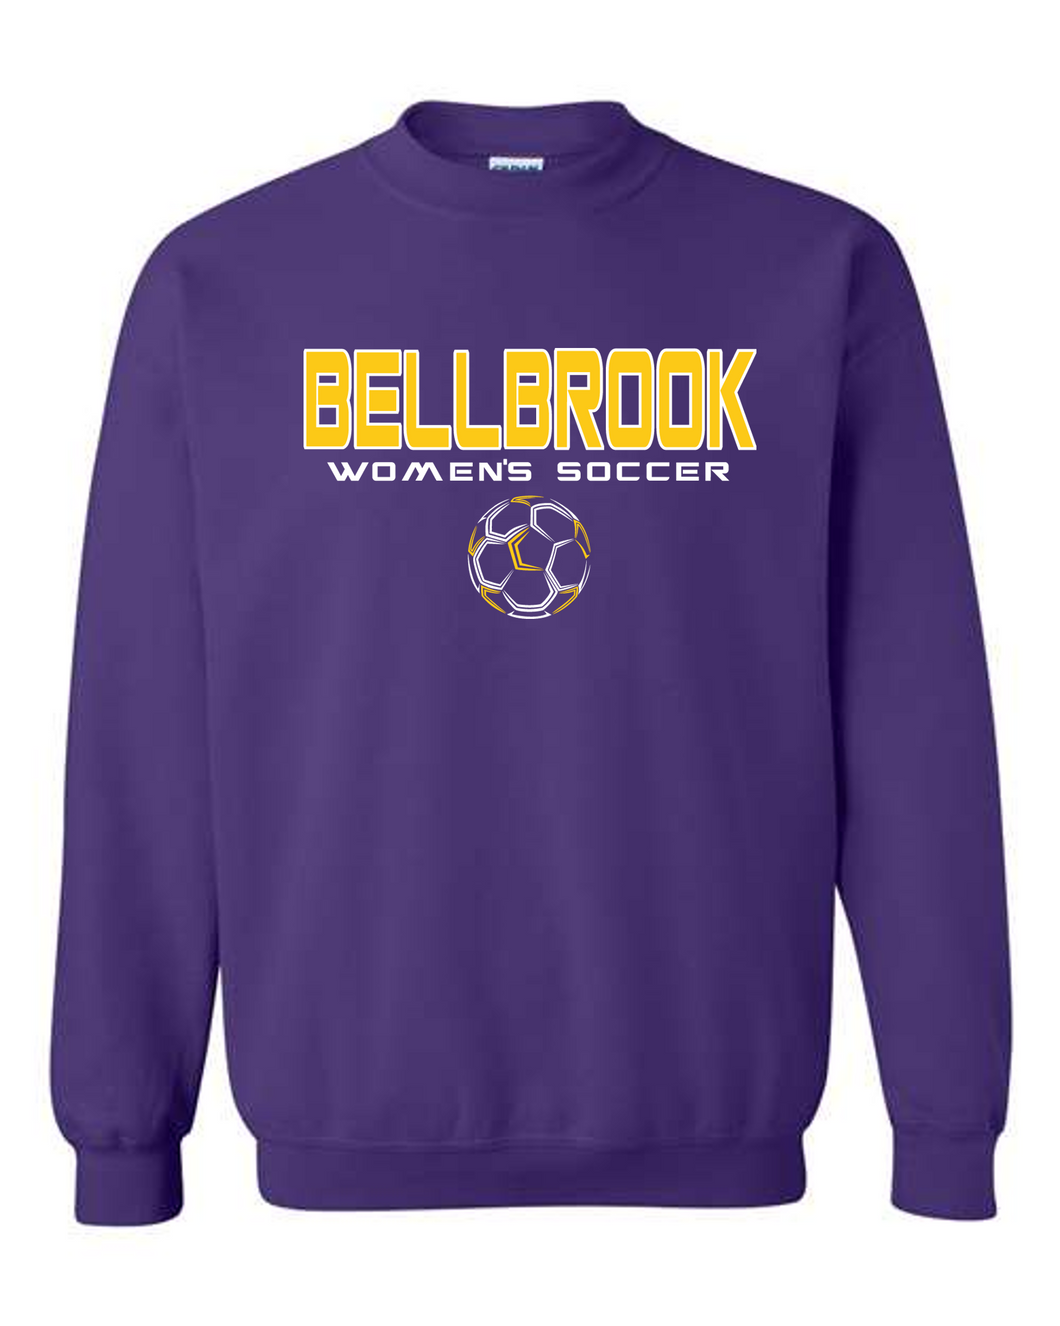 BHS Women's Soccer Purple Crewneck Sweatshirt